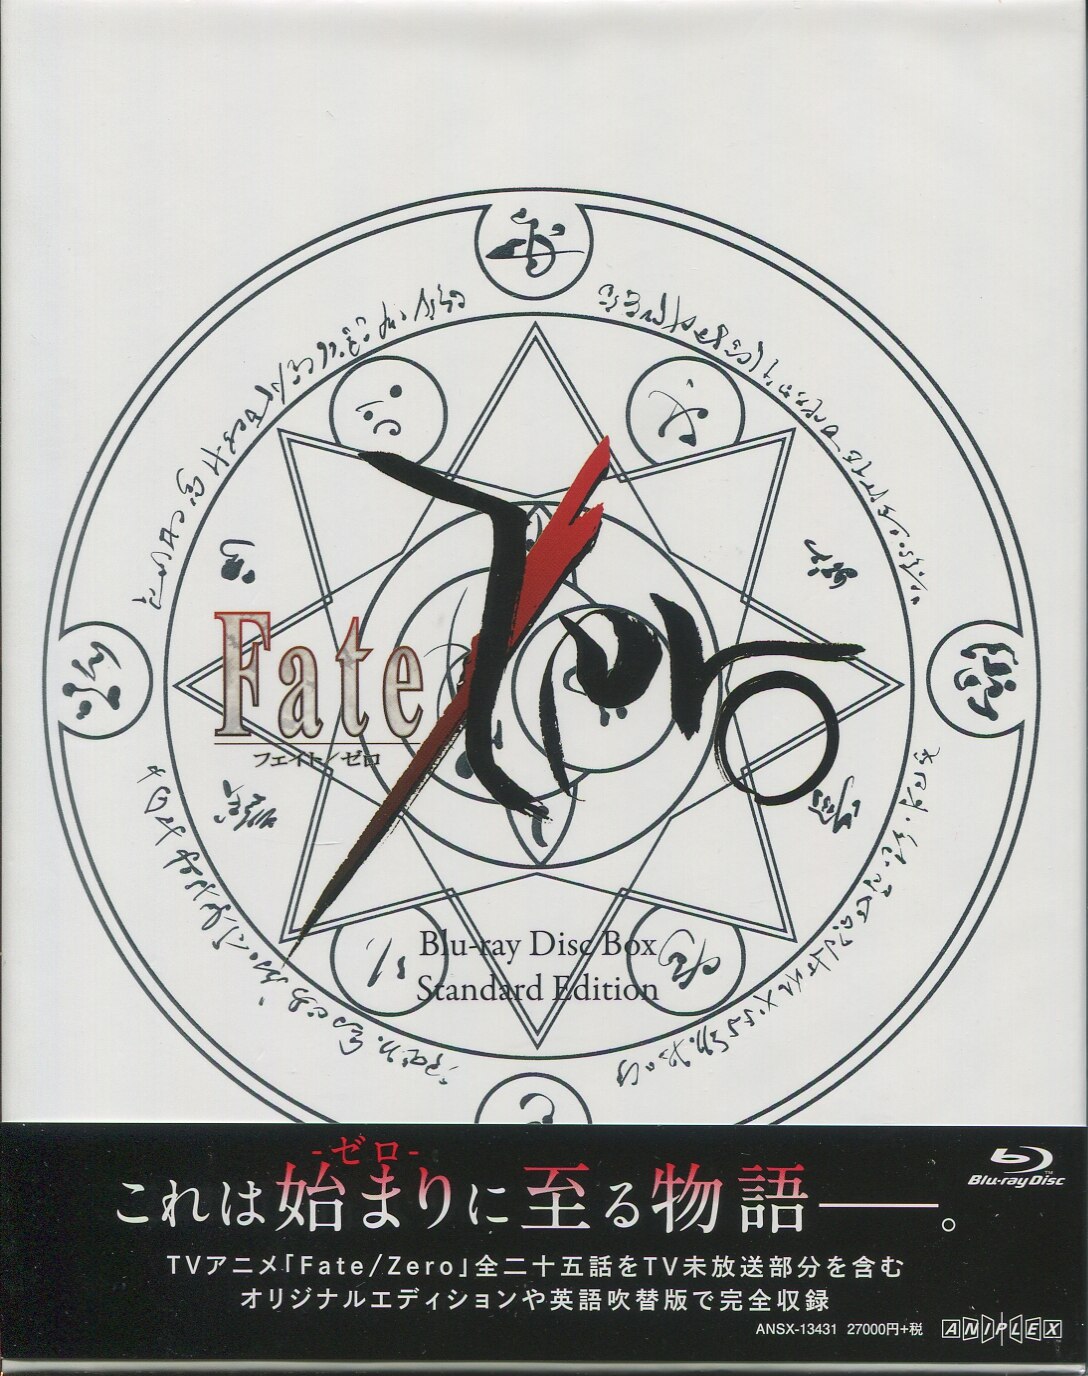 Fate / Zero Blu-ray Disc Box Standard Edition | MANDARAKE 在线商店